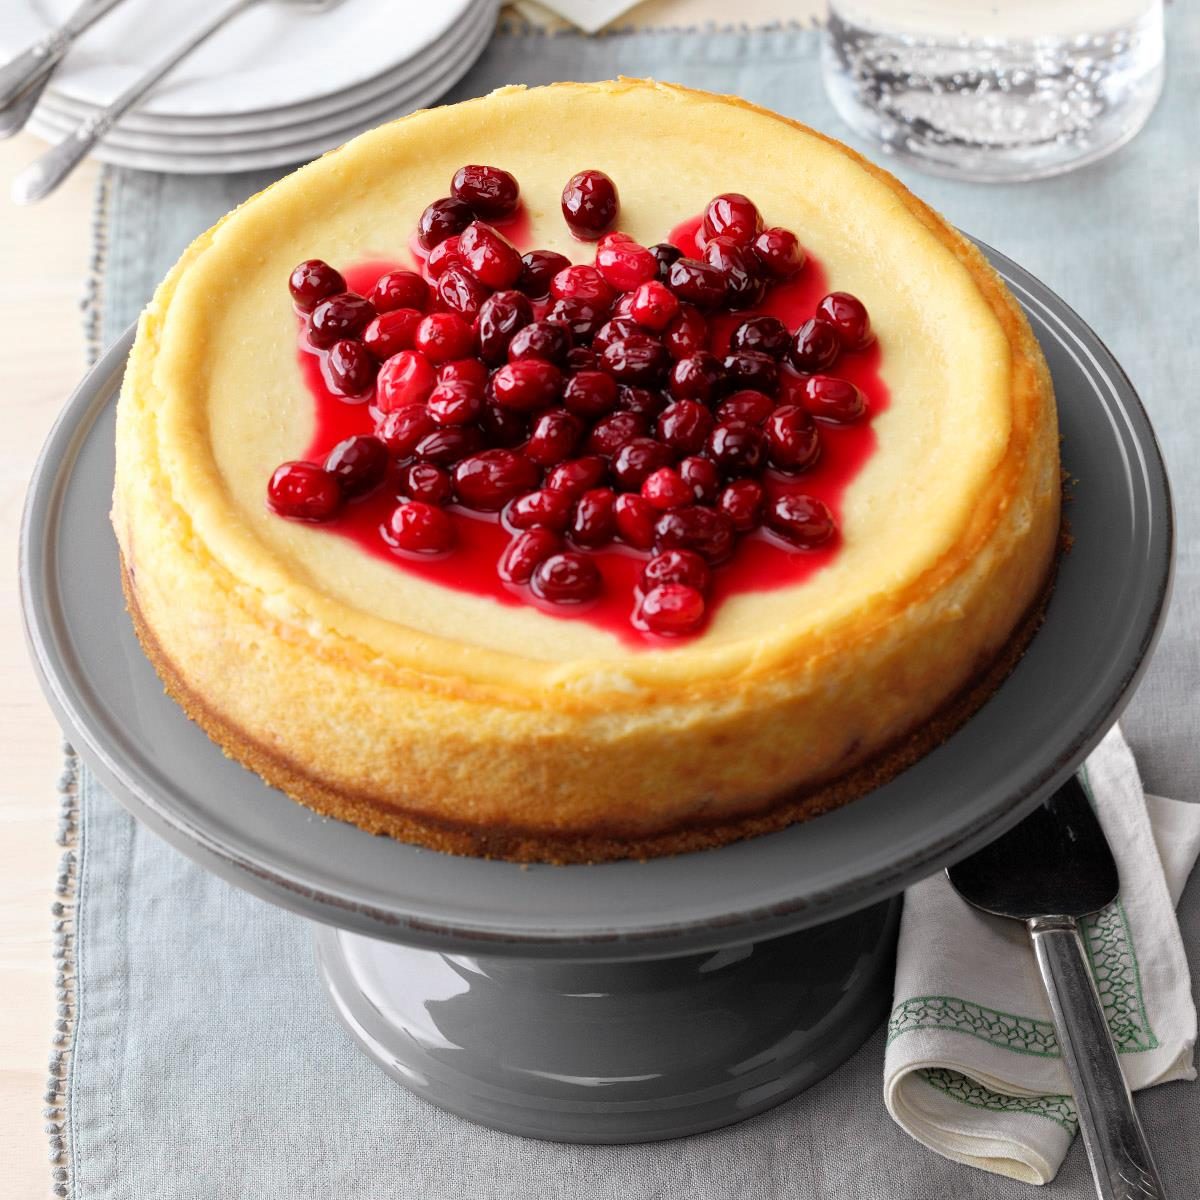 Winning Cranberry Cheesecake Recipe: How to Make It